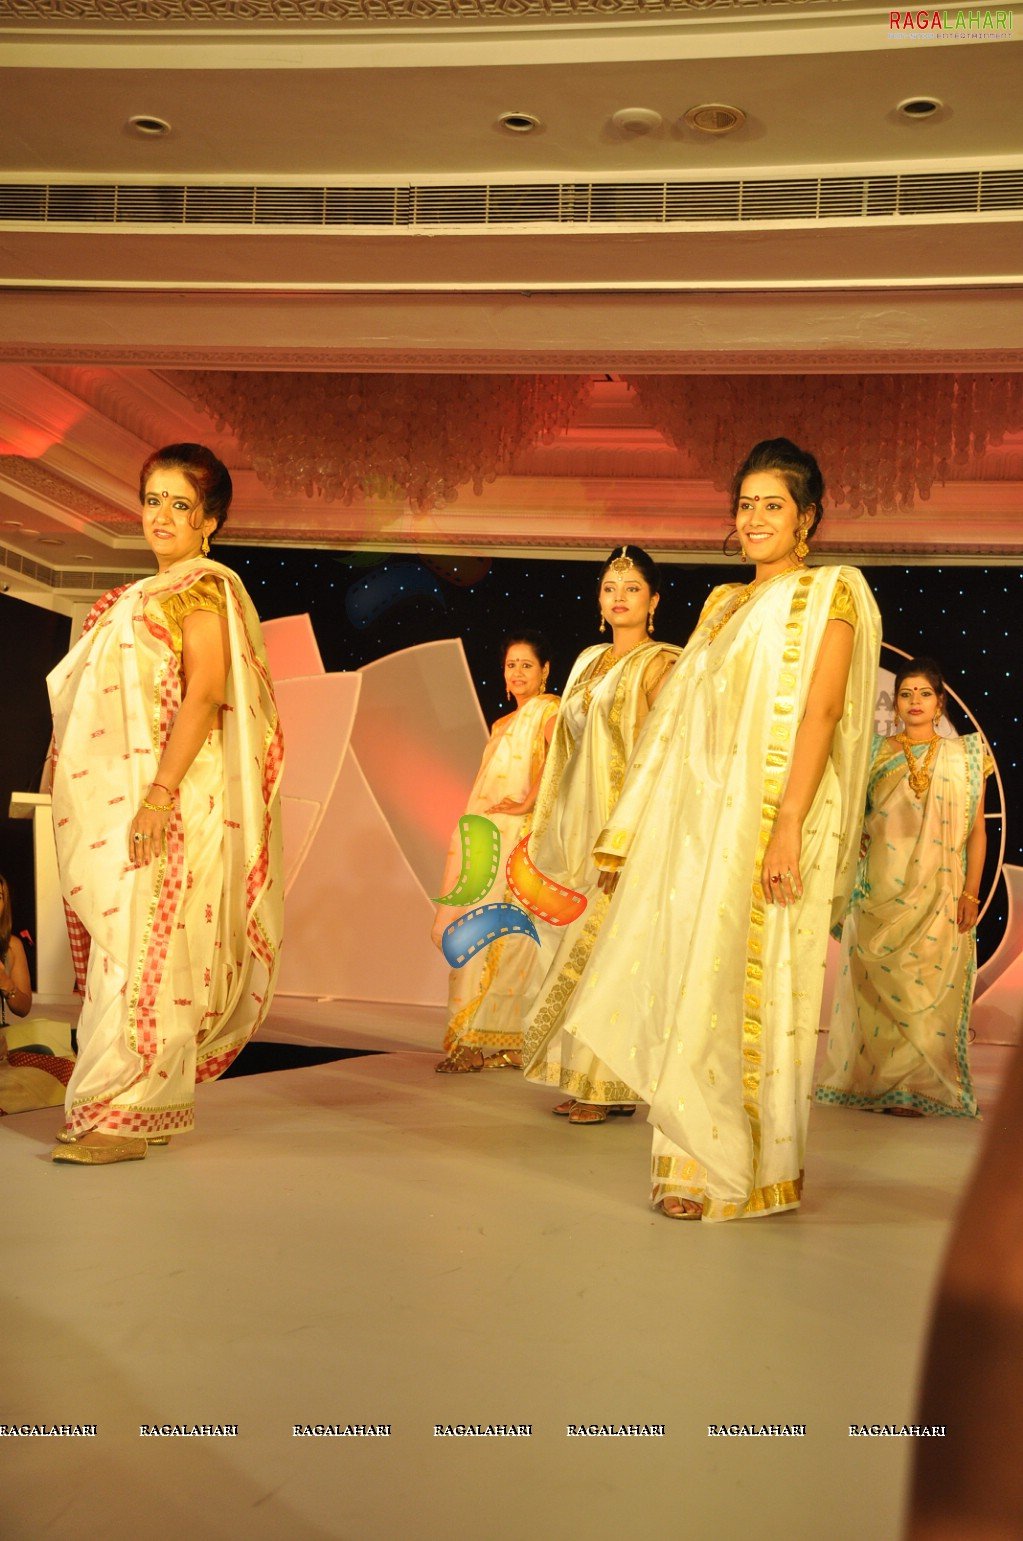 Salon Collection Launch at ITC Kakatiya Ladies Club, Hyd